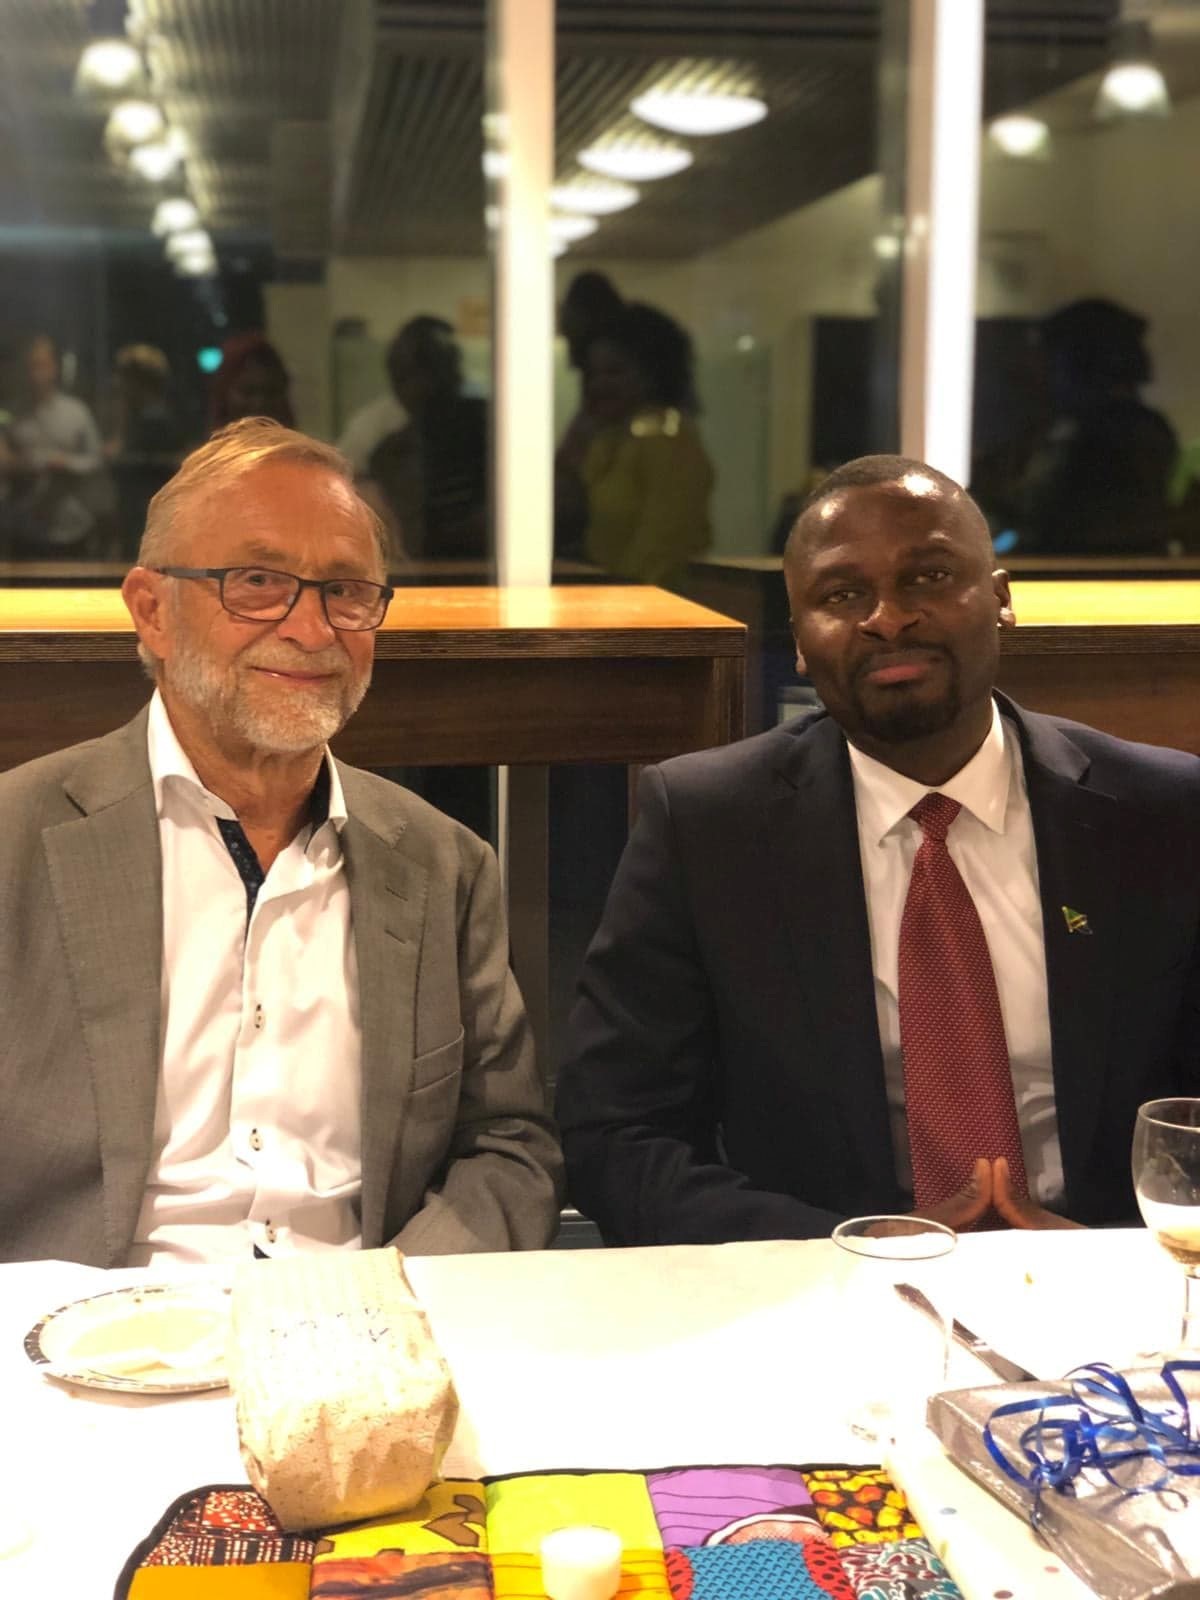 Nyamoga博士与他的主要主管教授birge索伯格在晚宴后成功地捍卫他的博士学位